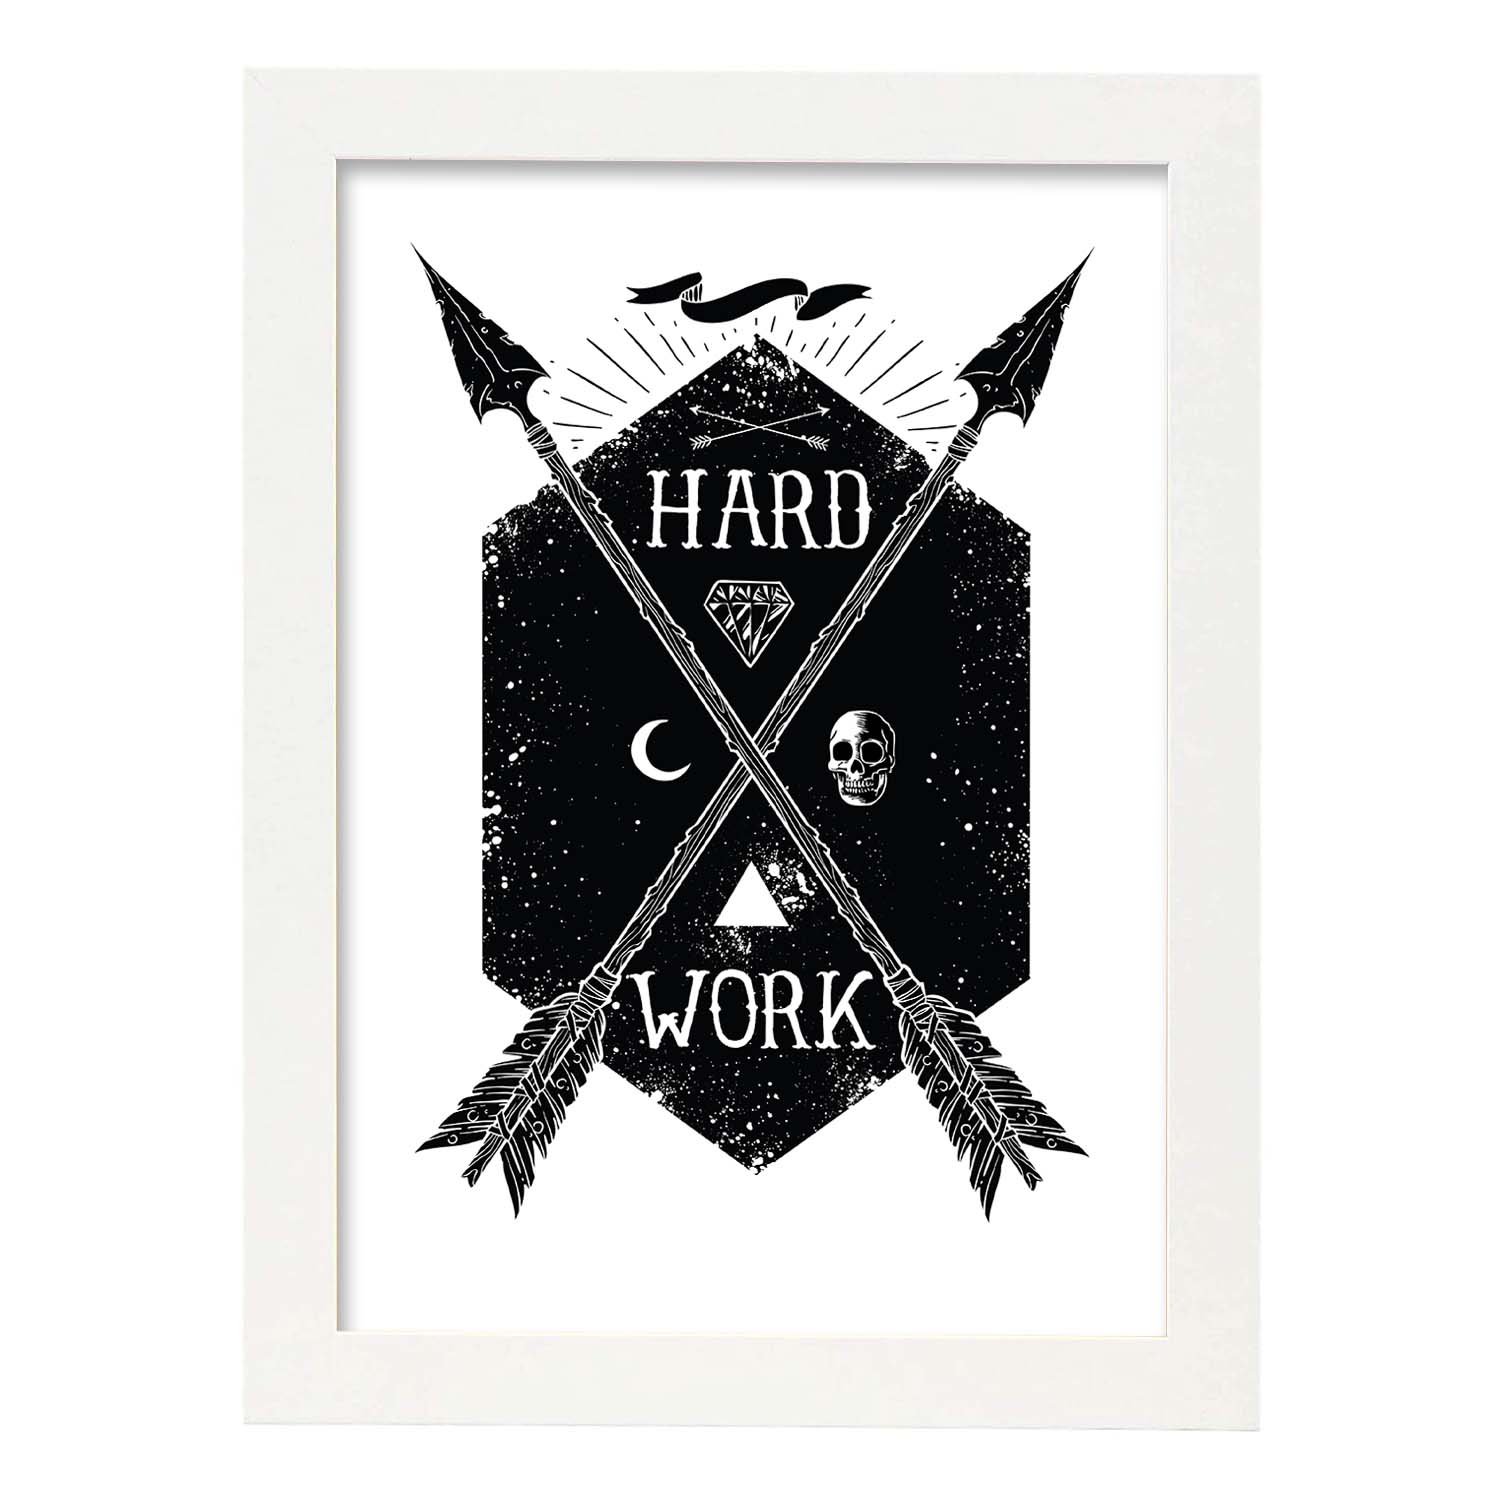 Poster de Trabajo duro. Lámina decorativa de diseño.-Artwork-Nacnic-A4-Marco Blanco-Nacnic Estudio SL